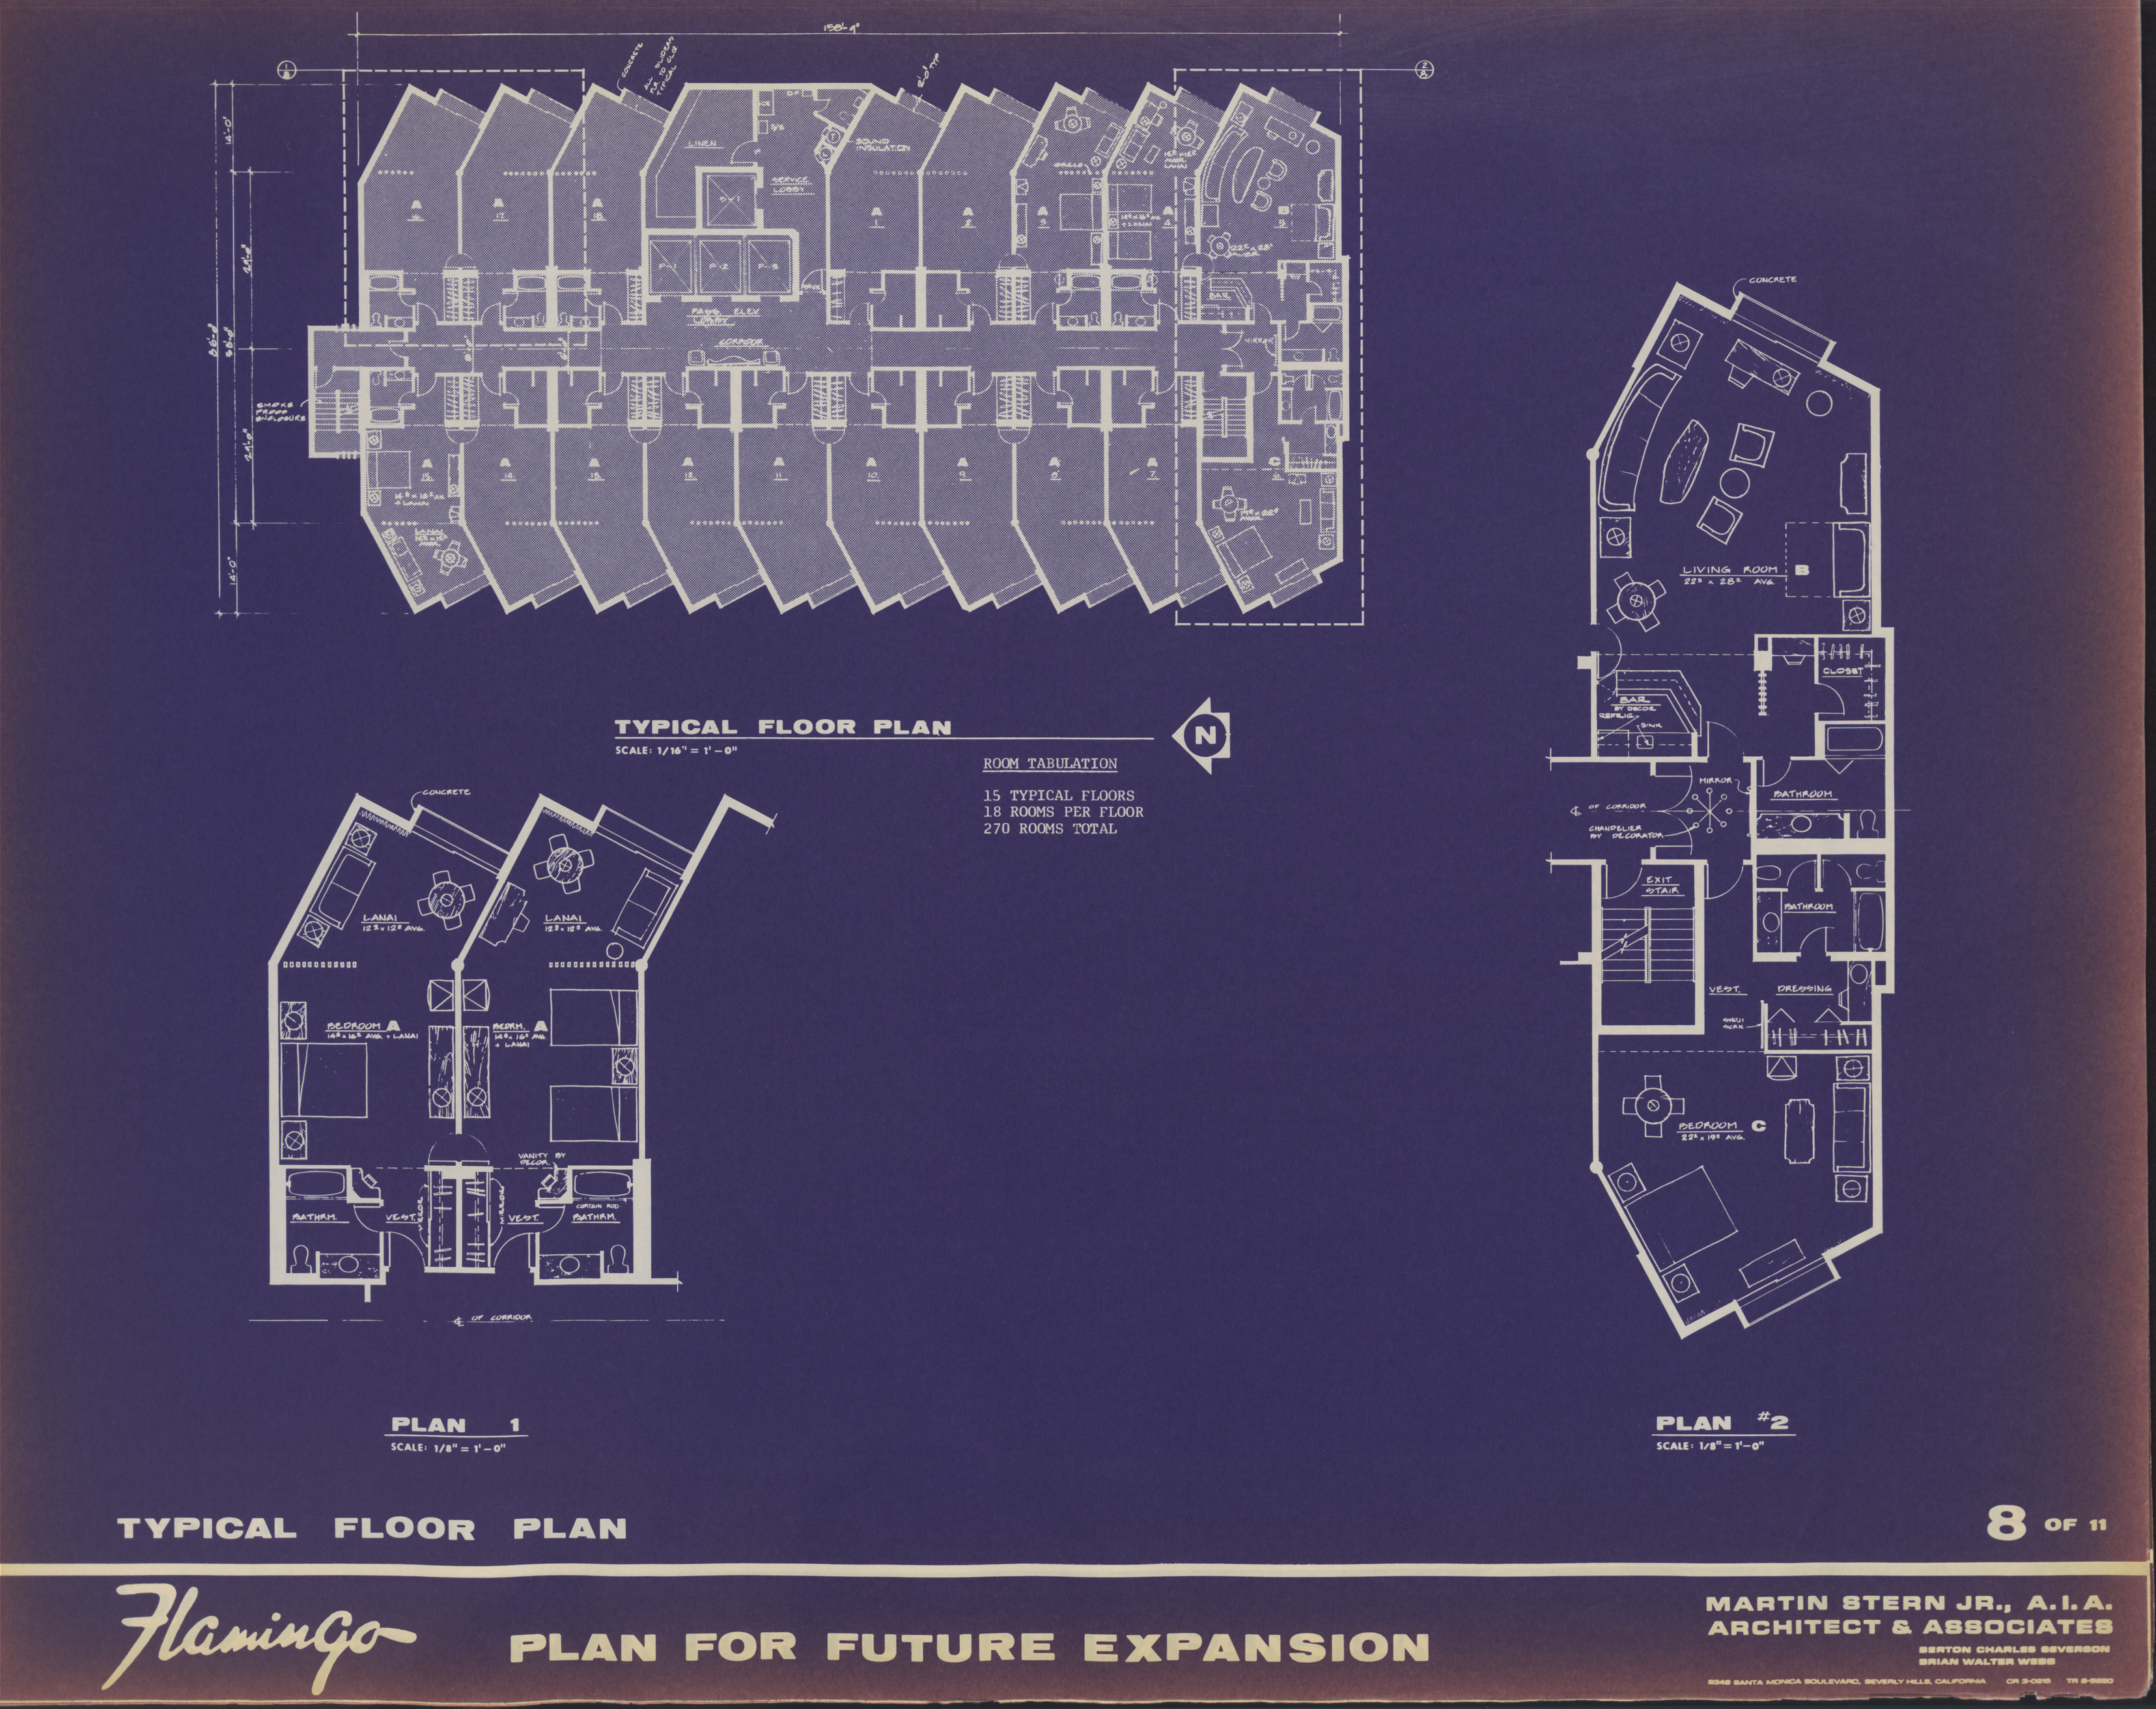 Flamingo Plan for Future Expansion Proposal, image 8